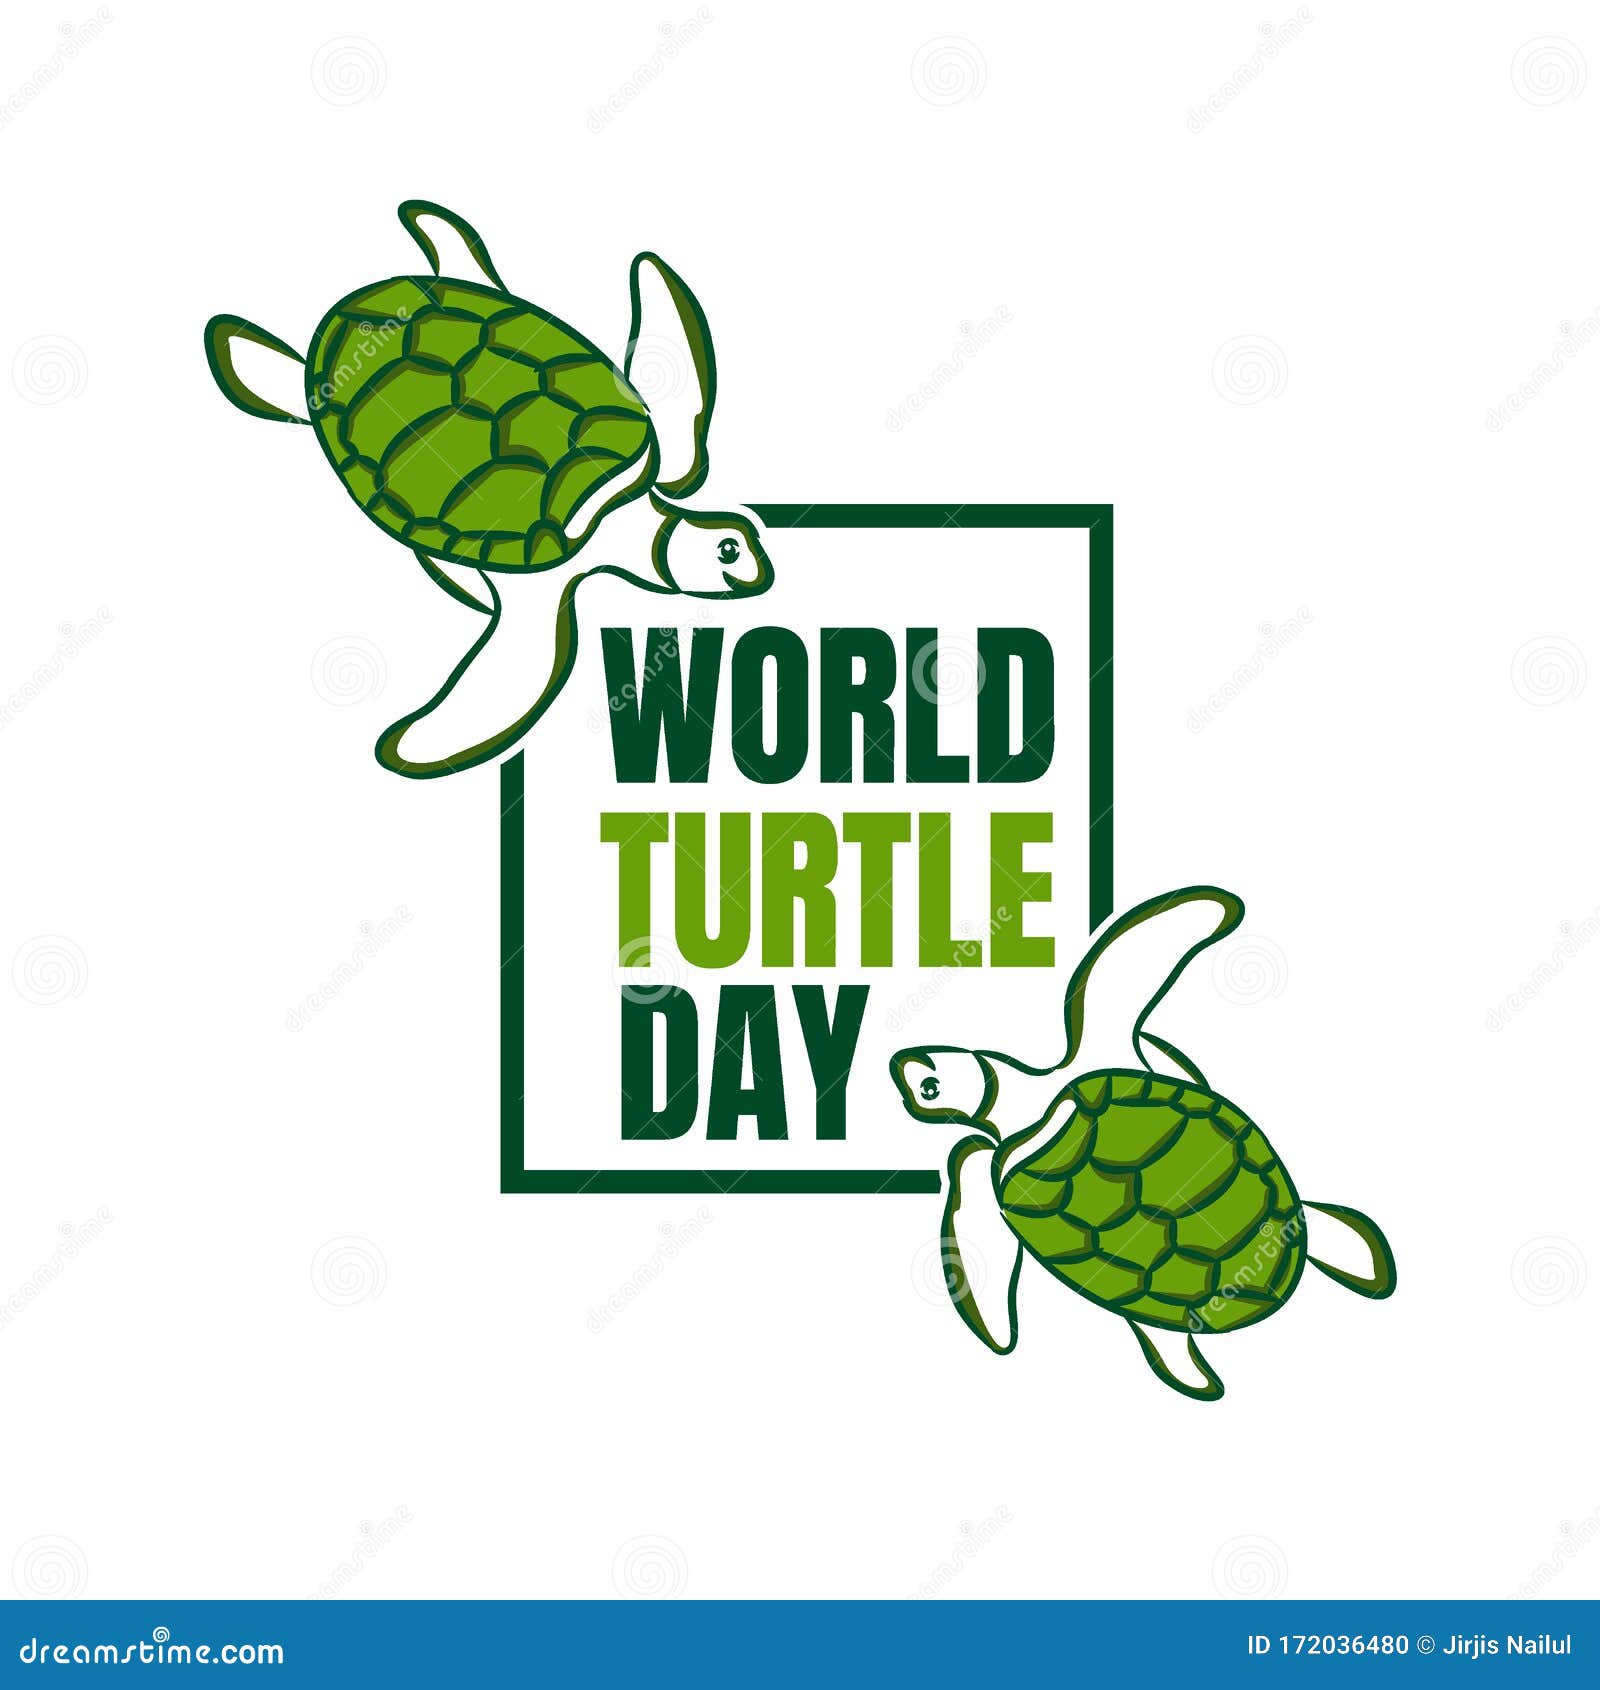 Tarikh sambutan world turtle day